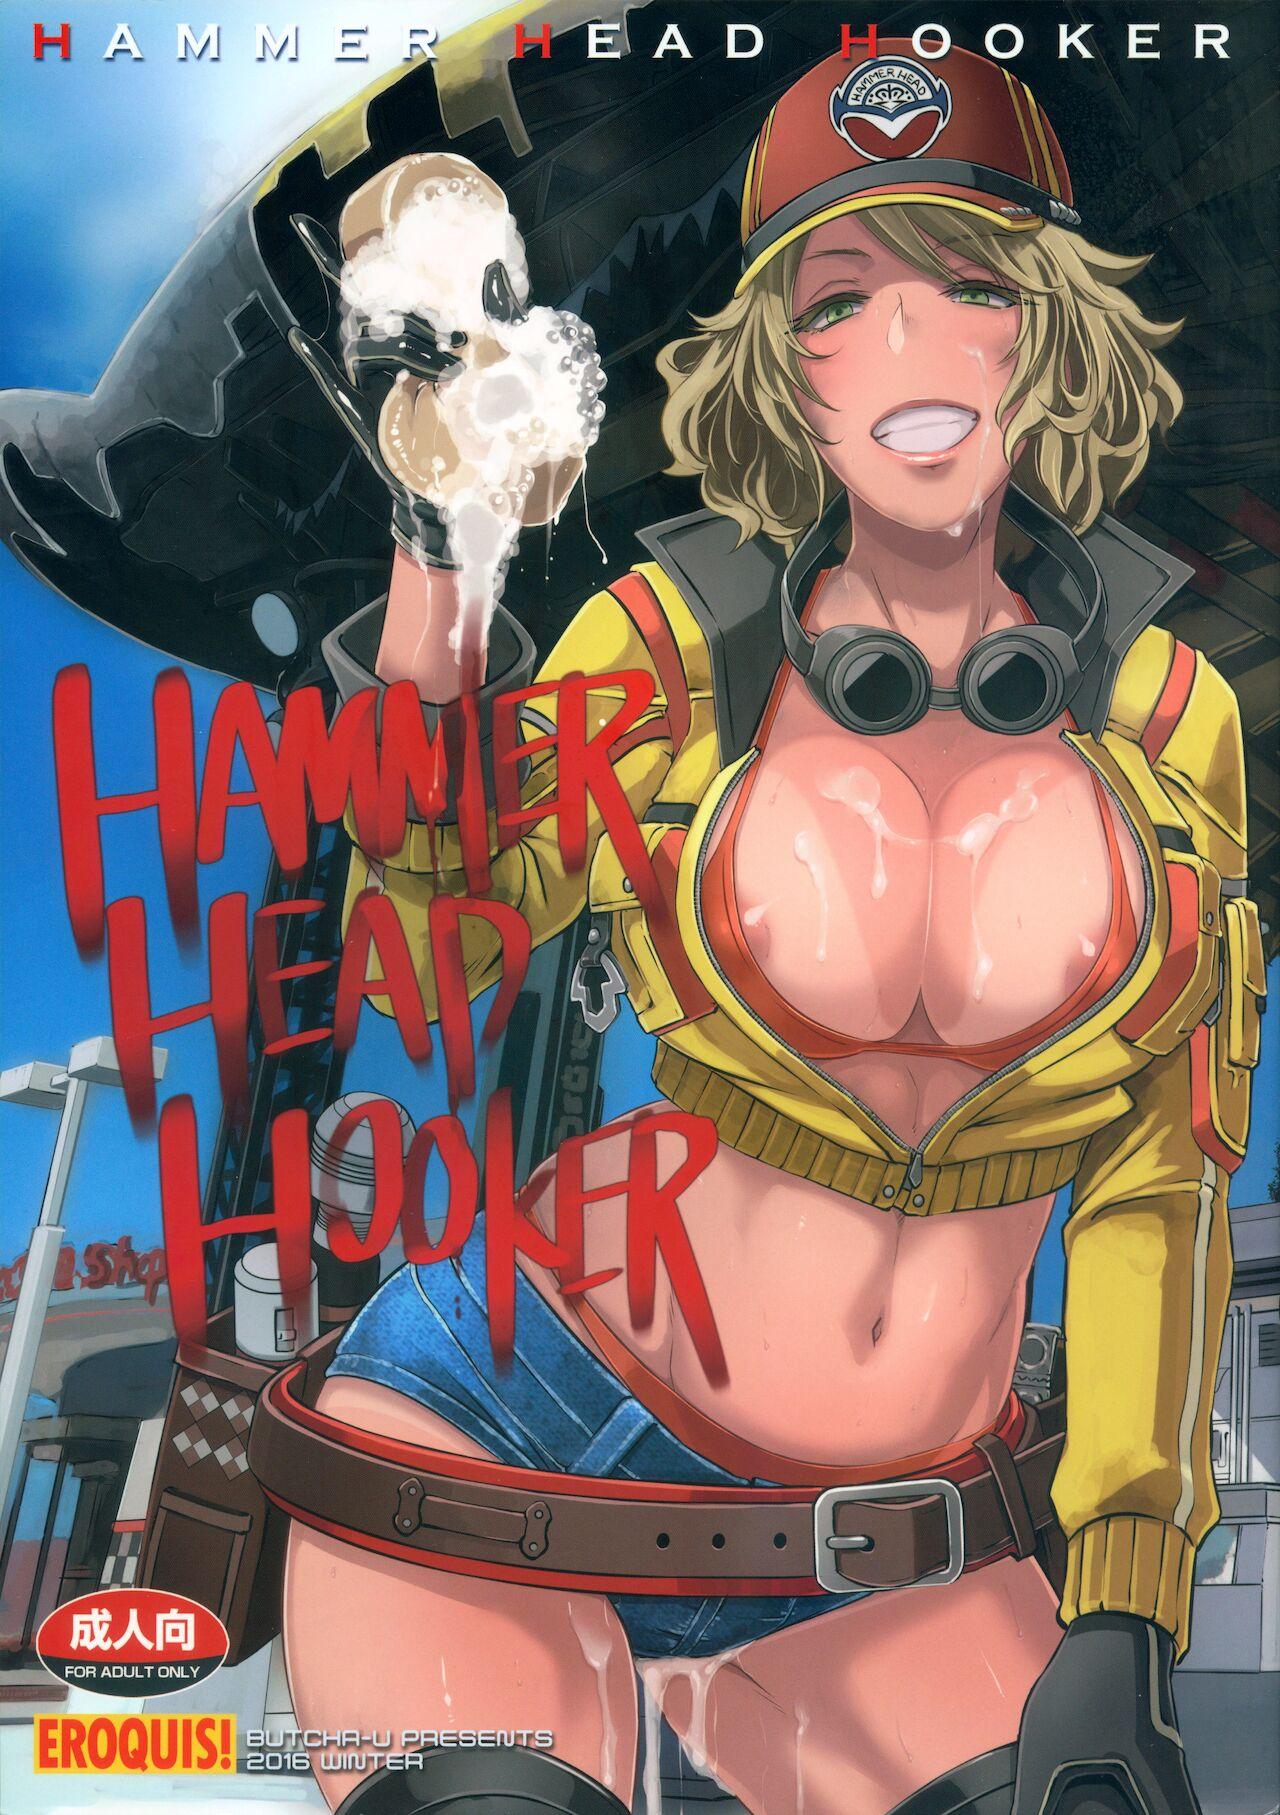 Nudes Hammer Head Hooker - Final fantasy xv Blowjob - Page 1